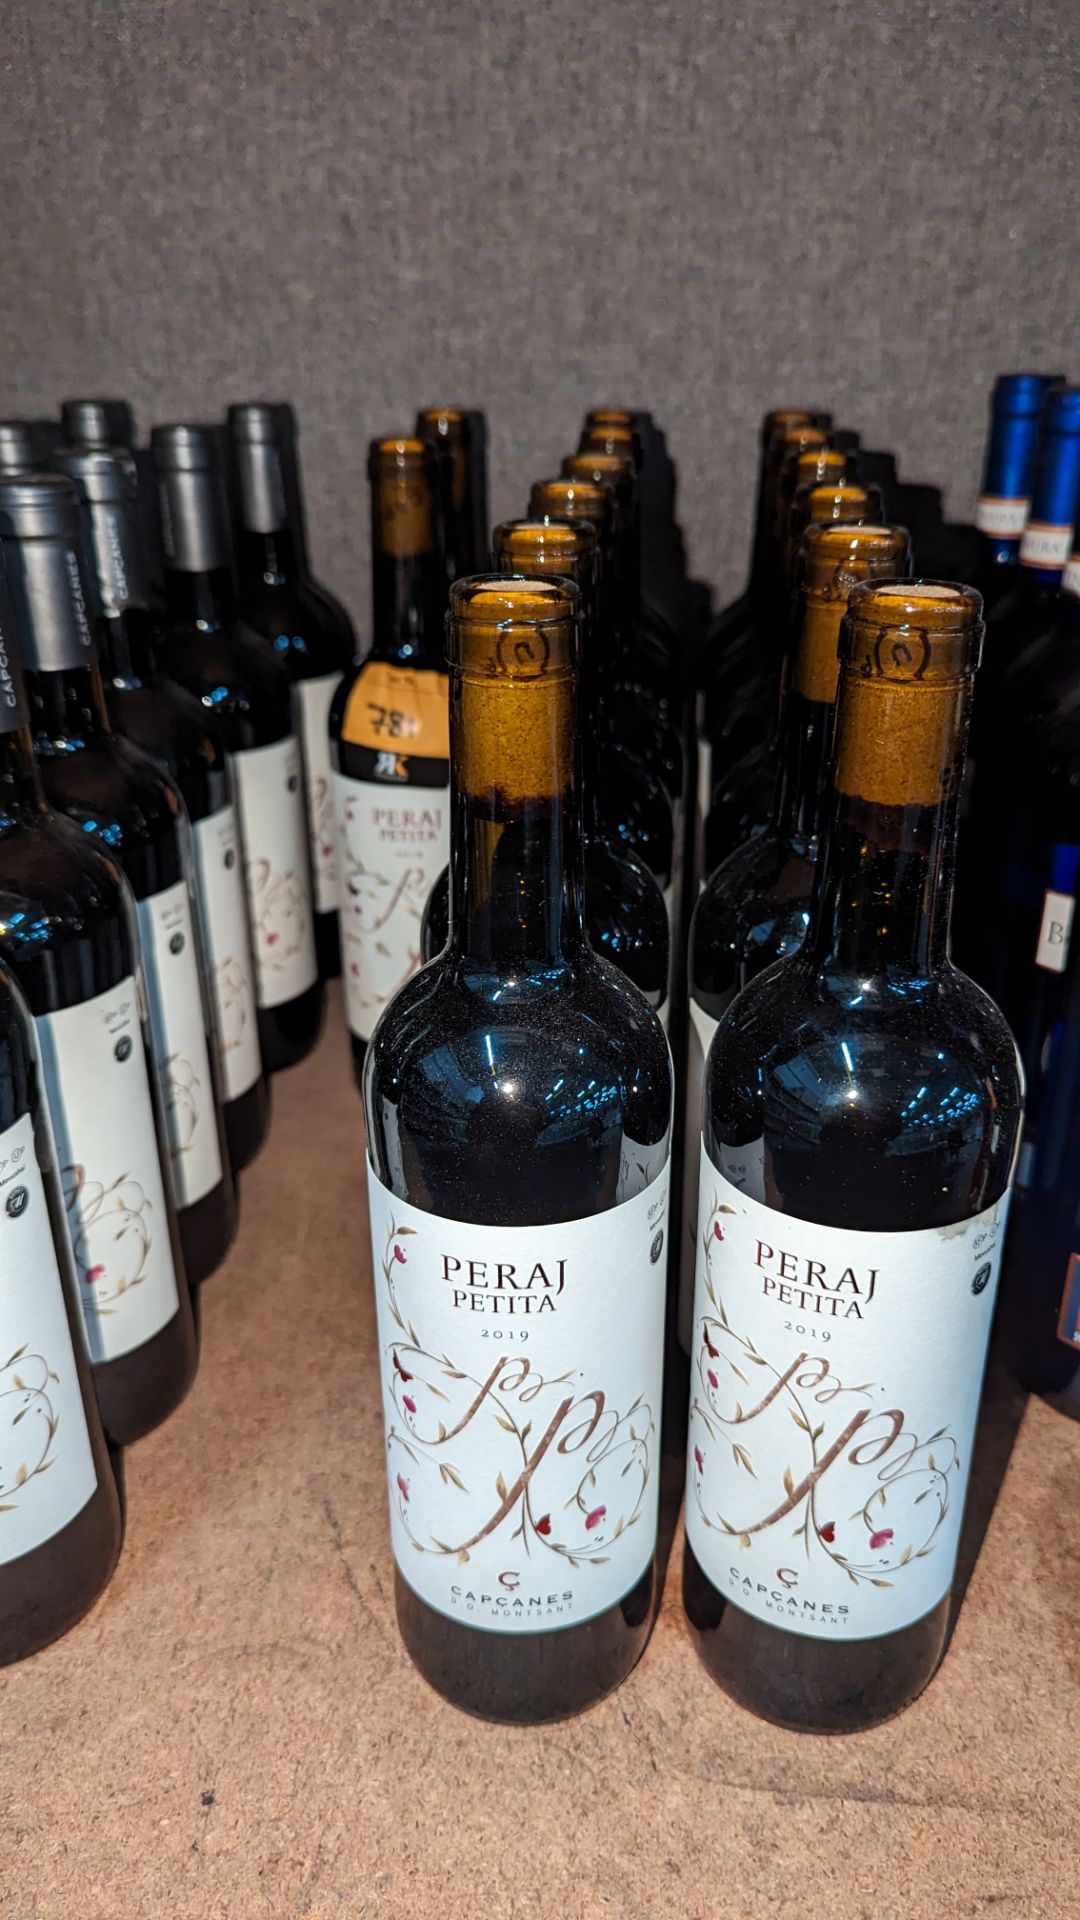 14 bottles of Celler de Capcanes Peraj Petita 2019 Spanish red wine sold under AWRS number XQAW00000 - Image 2 of 3